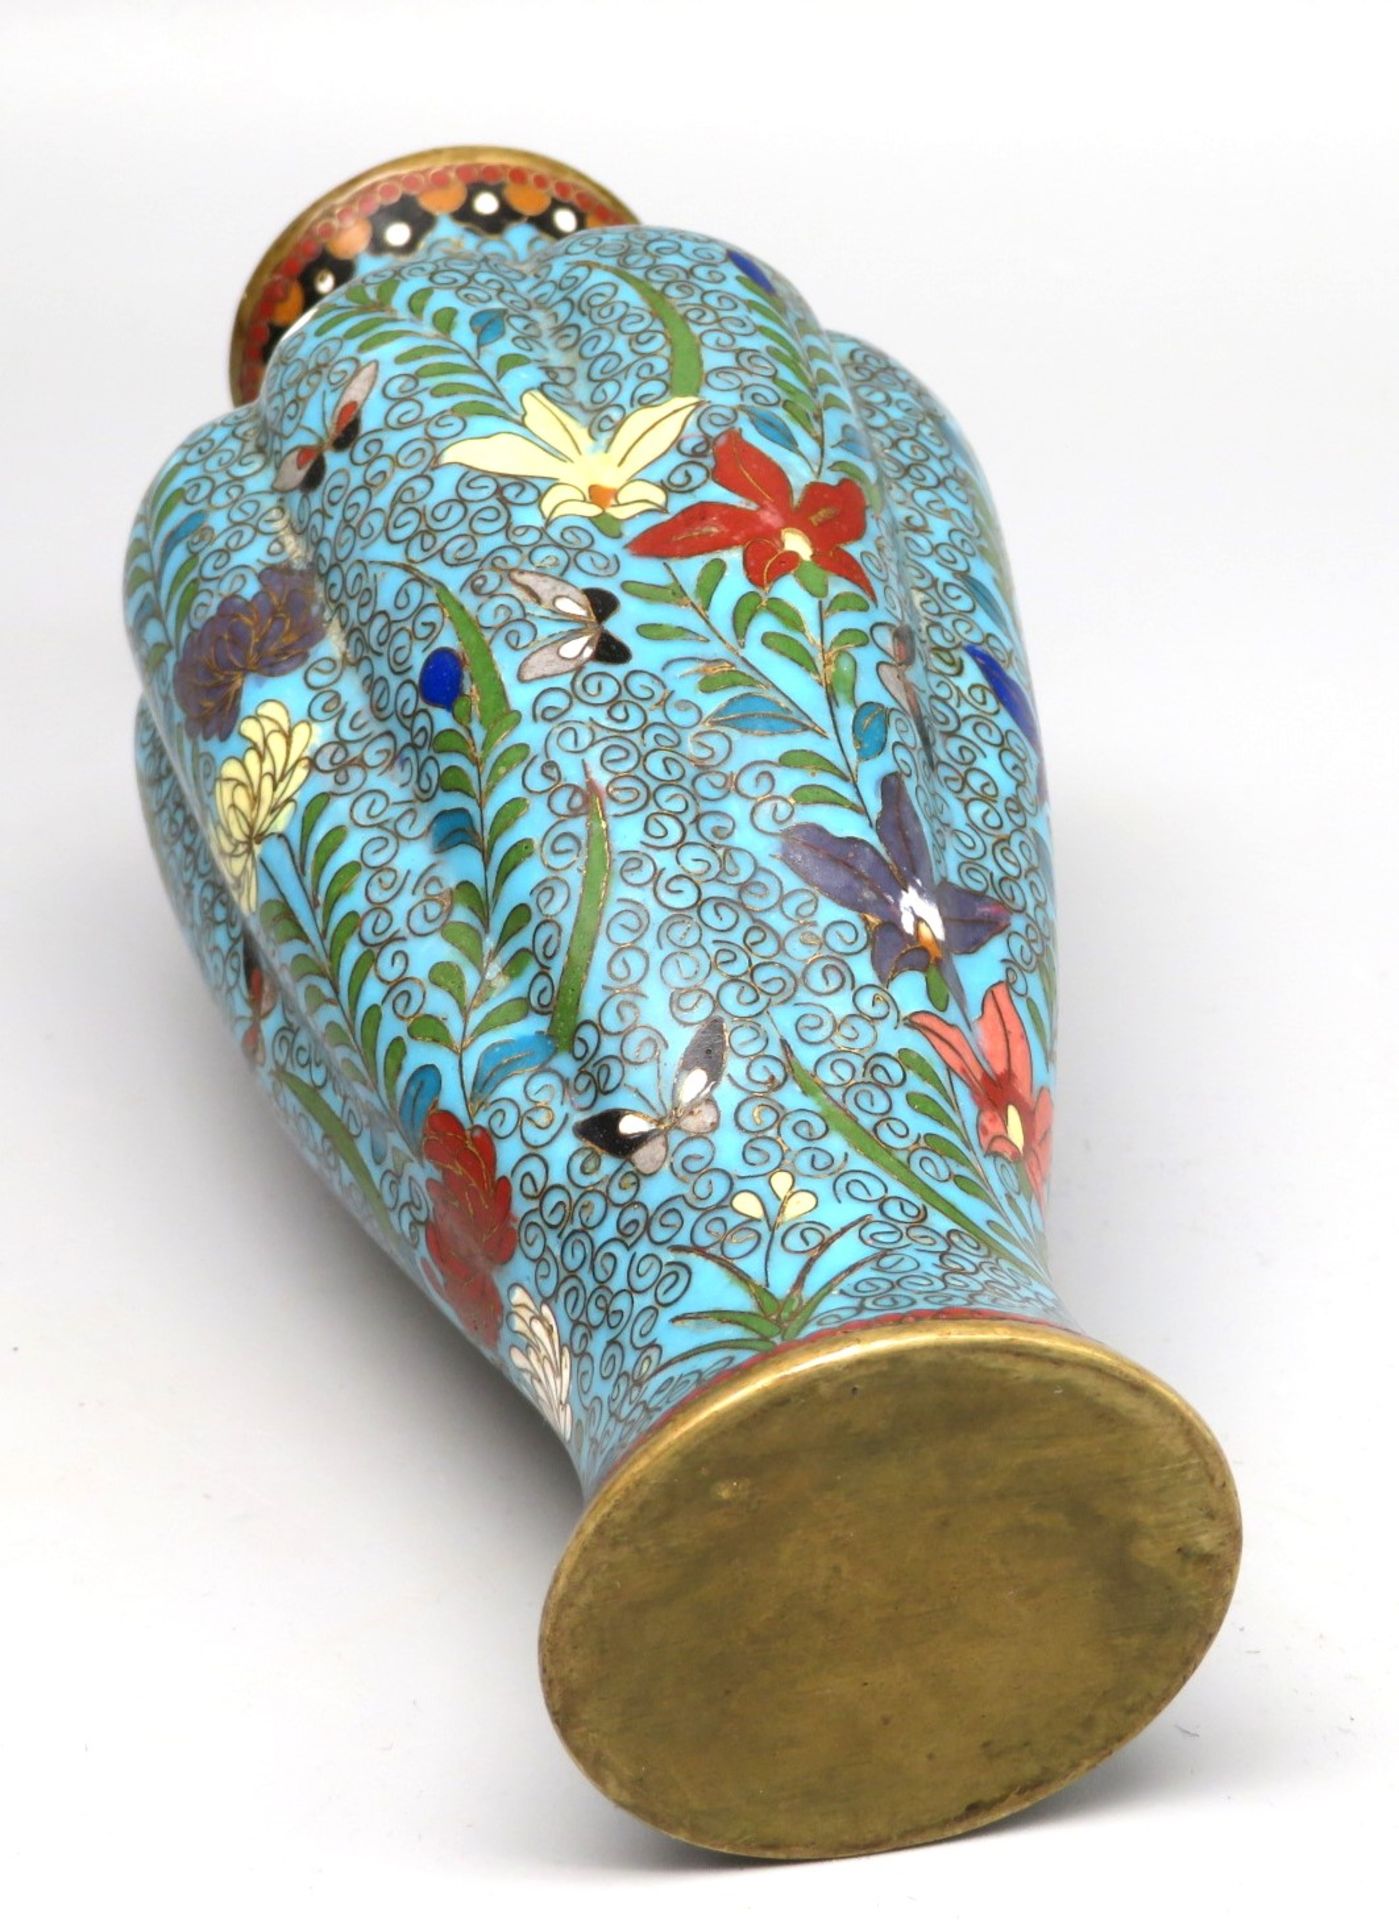 Cloisonné Vase, Japan, Meiji Periode, 1868 - 1912, um 1900, farbiger Zellenschmelz, tadelloser Zust - Bild 2 aus 2